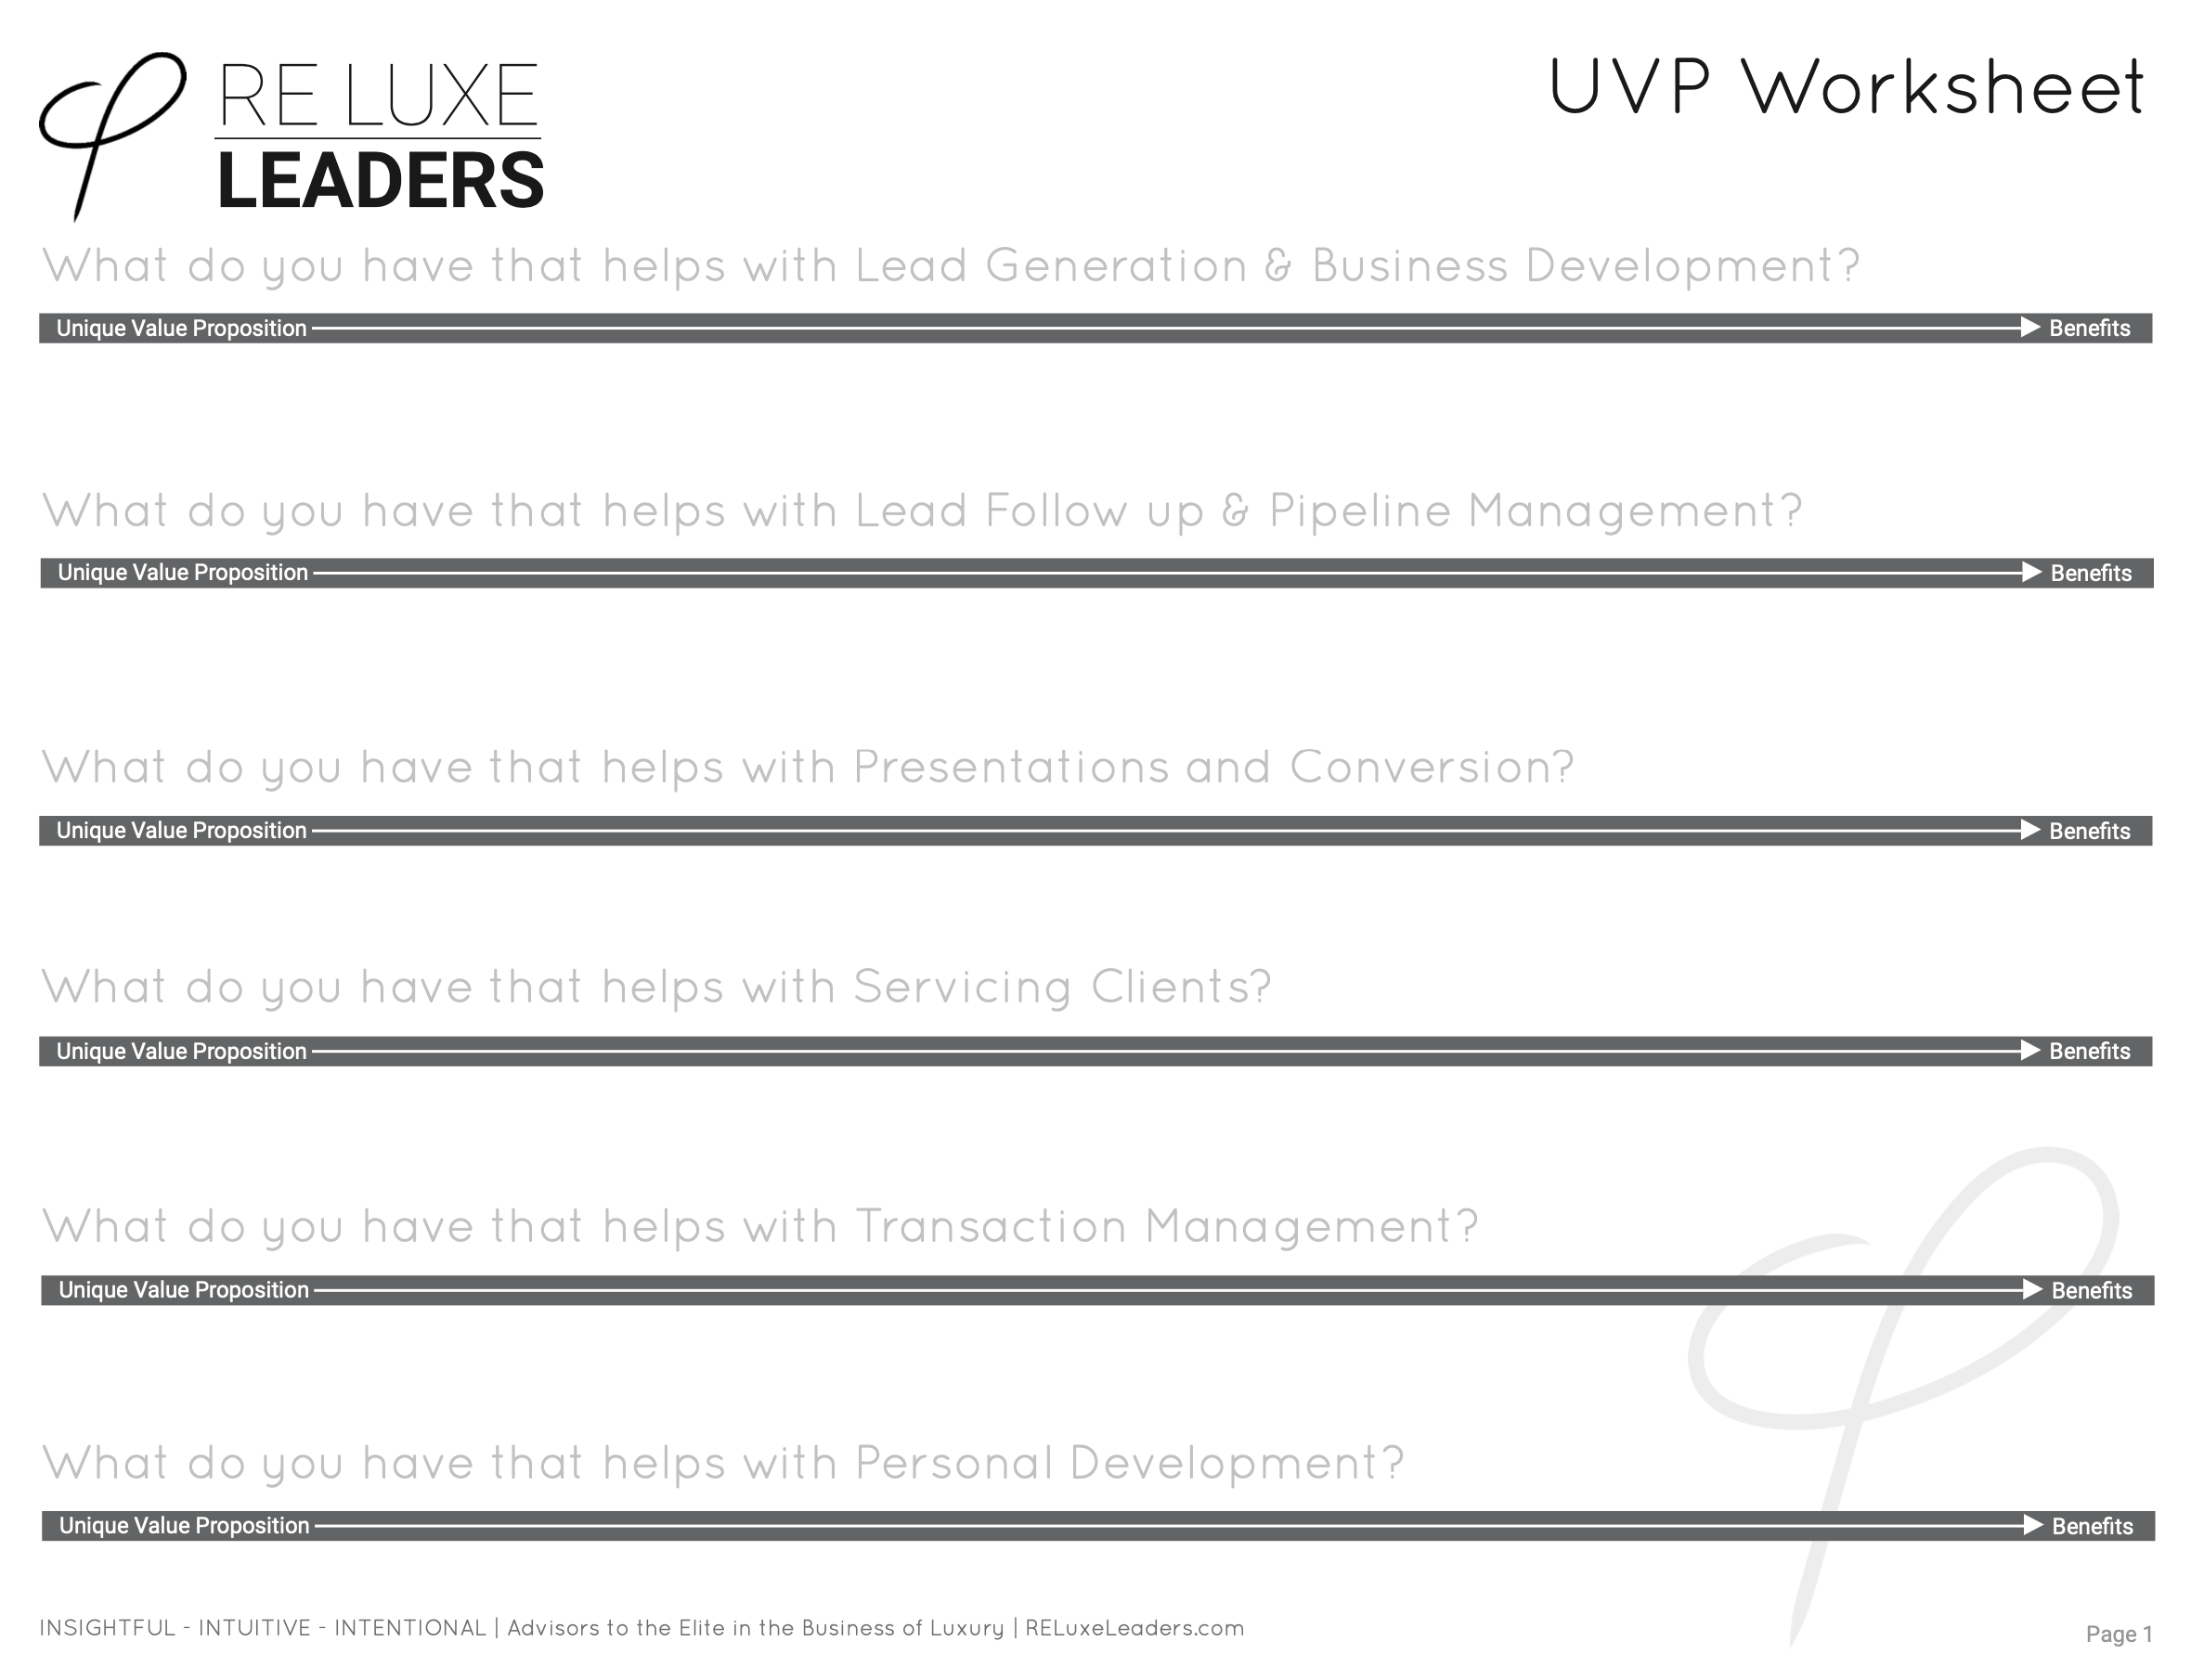 UVP Worksheet Screenshot